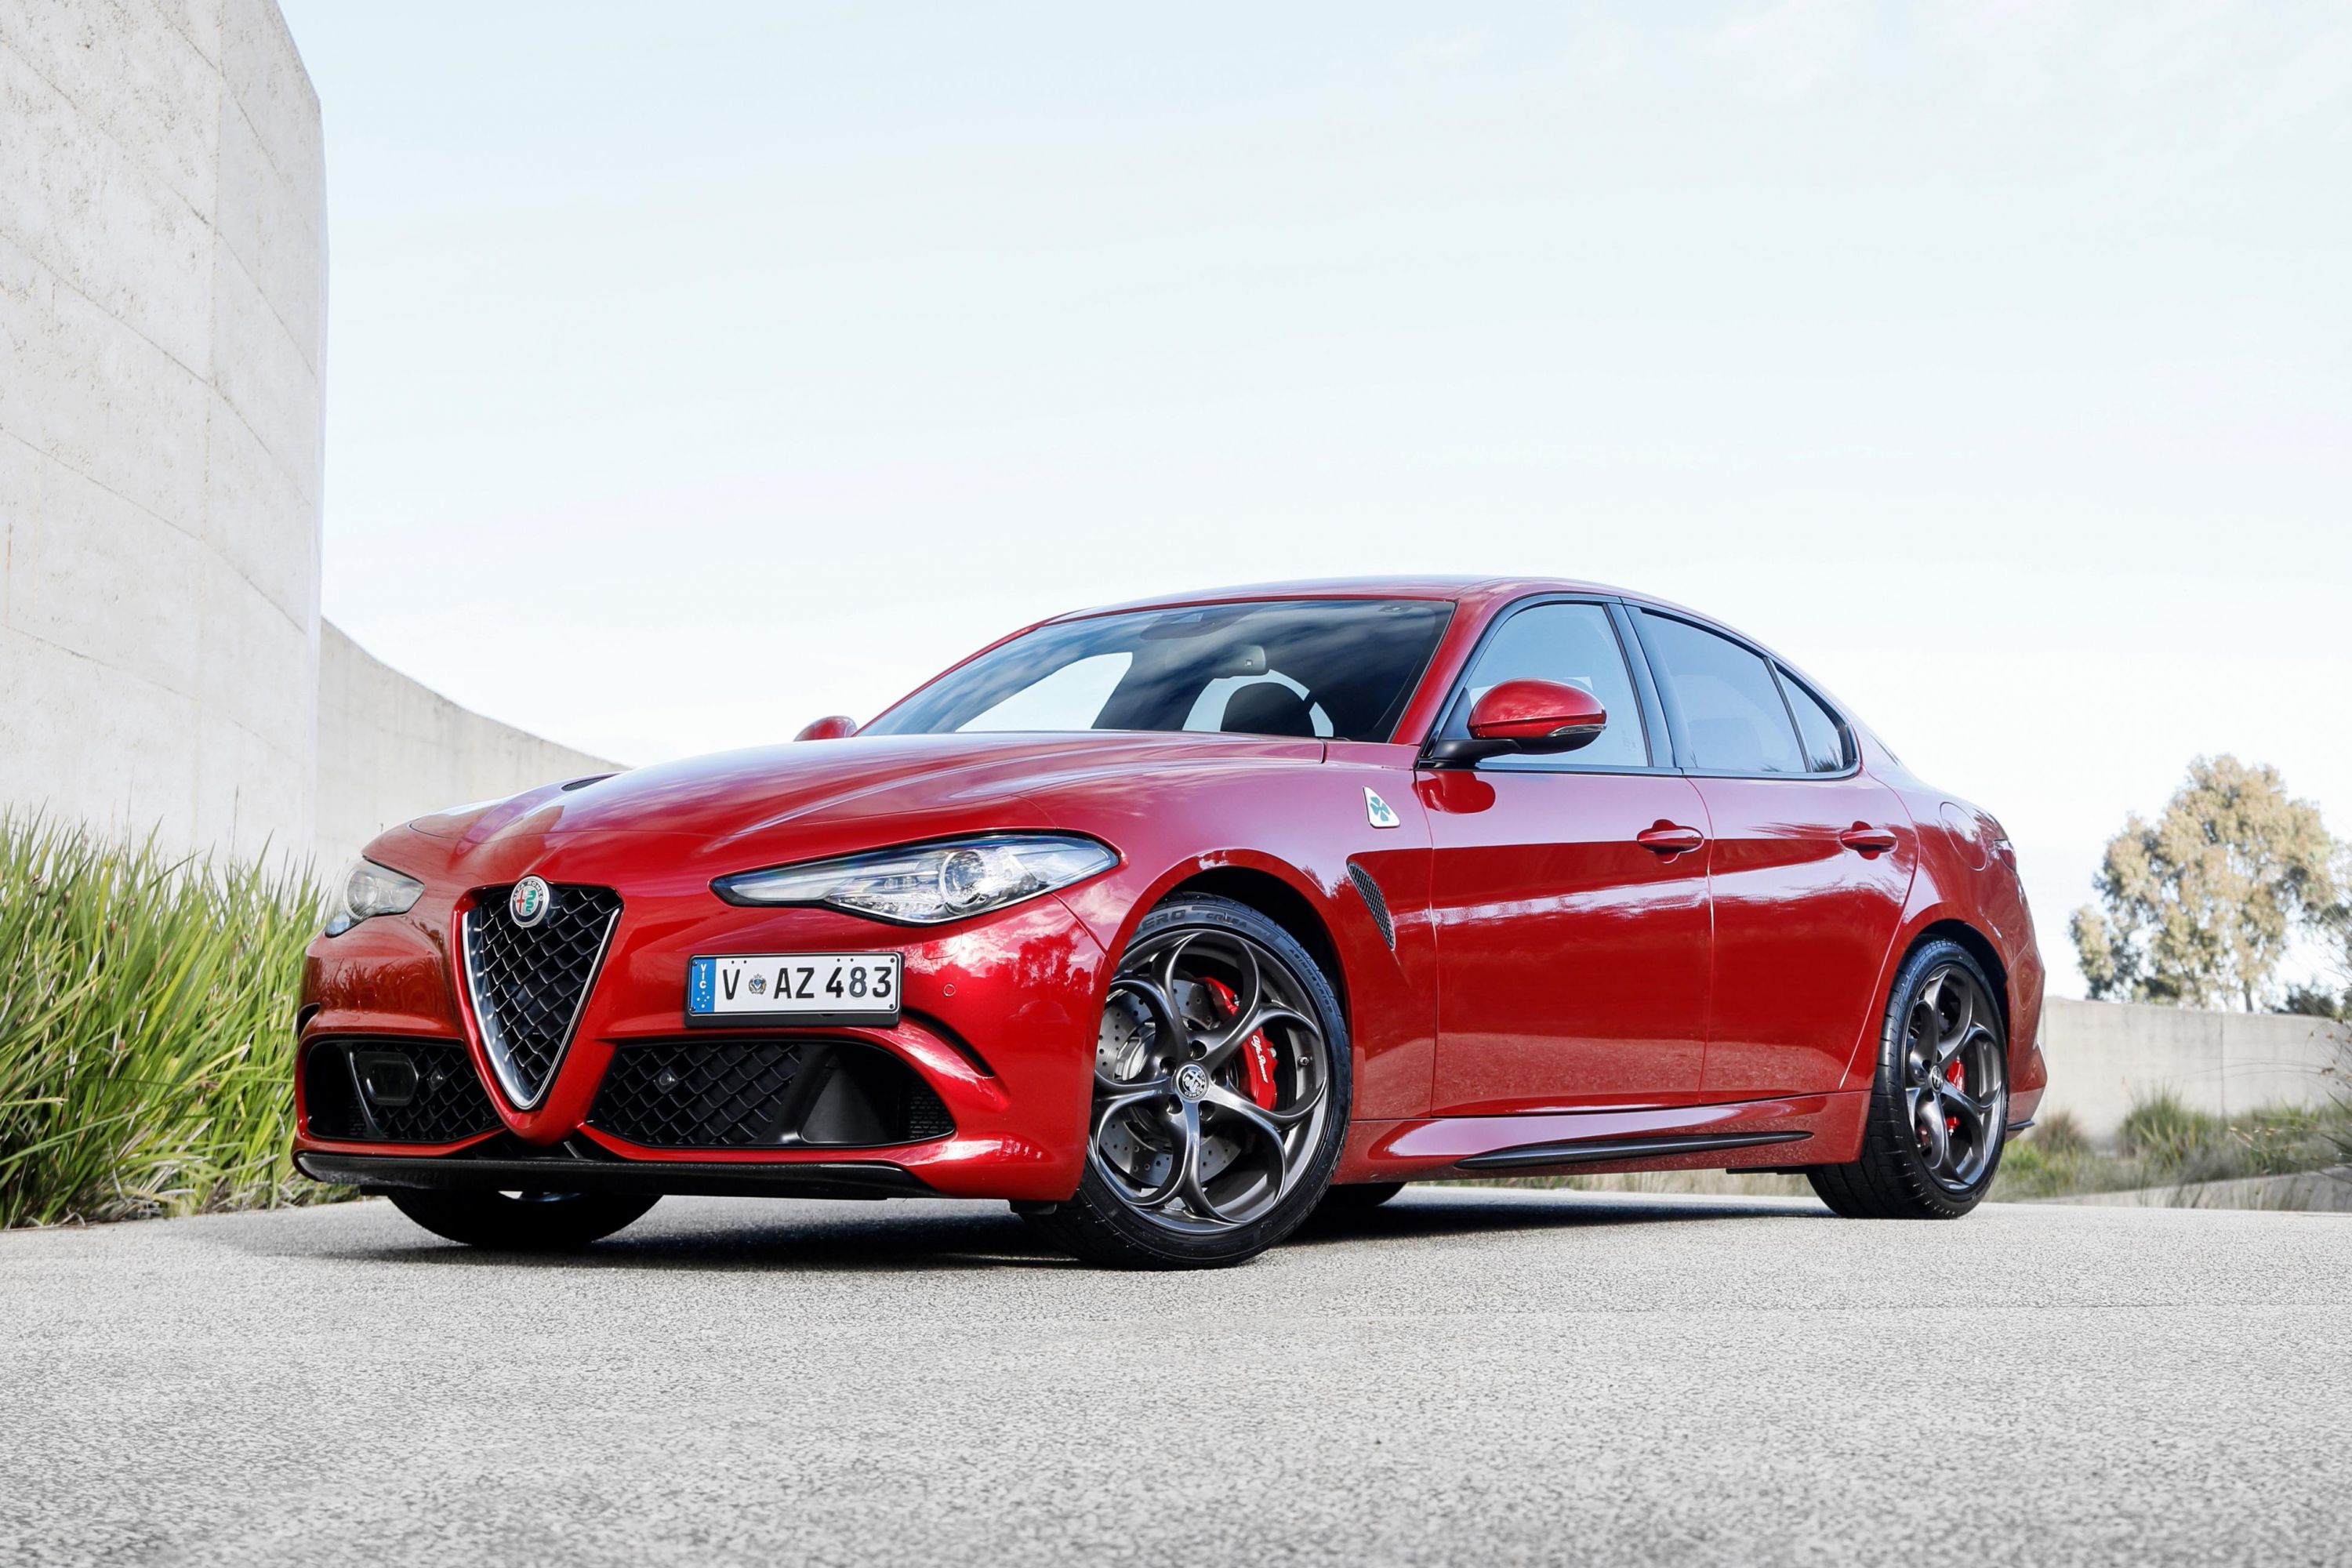 Changes to 2021 Alfa Romeo Models